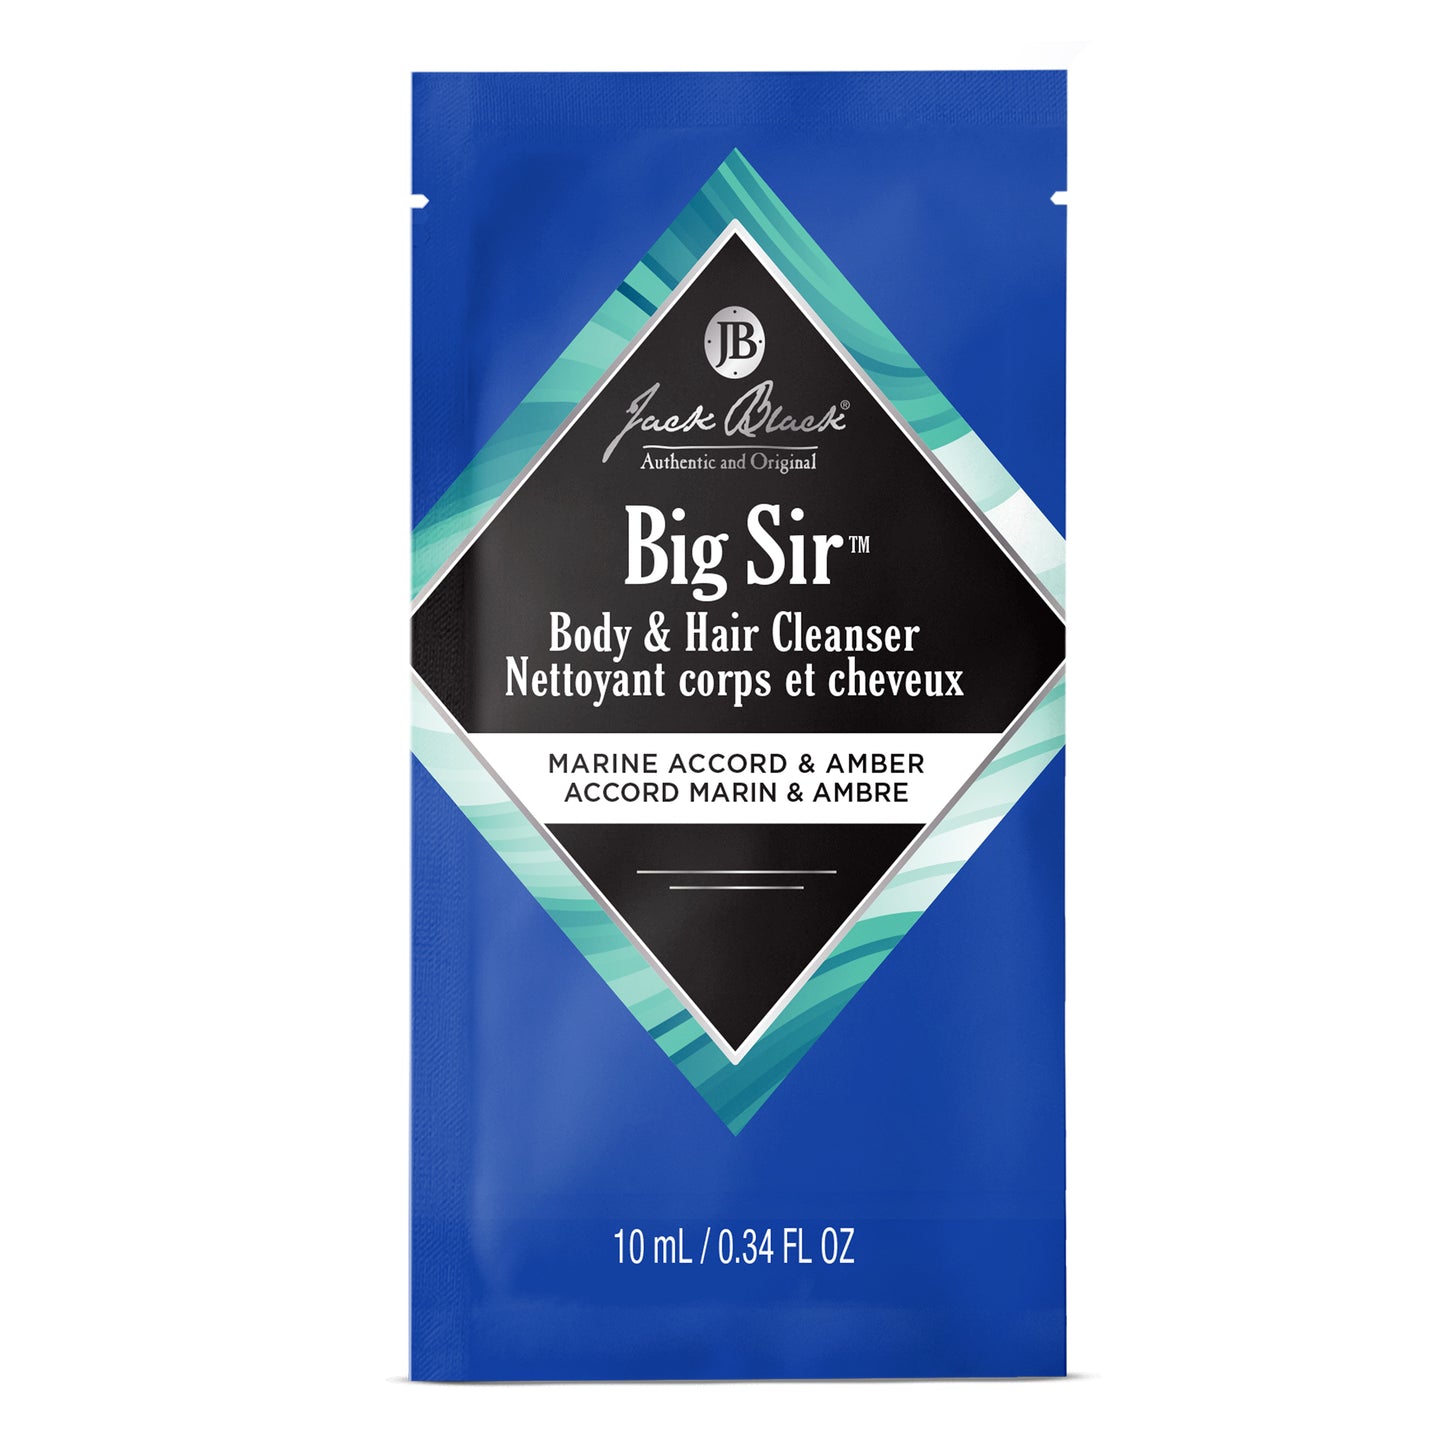 Big Sir Body & Hair Cleanser - sample